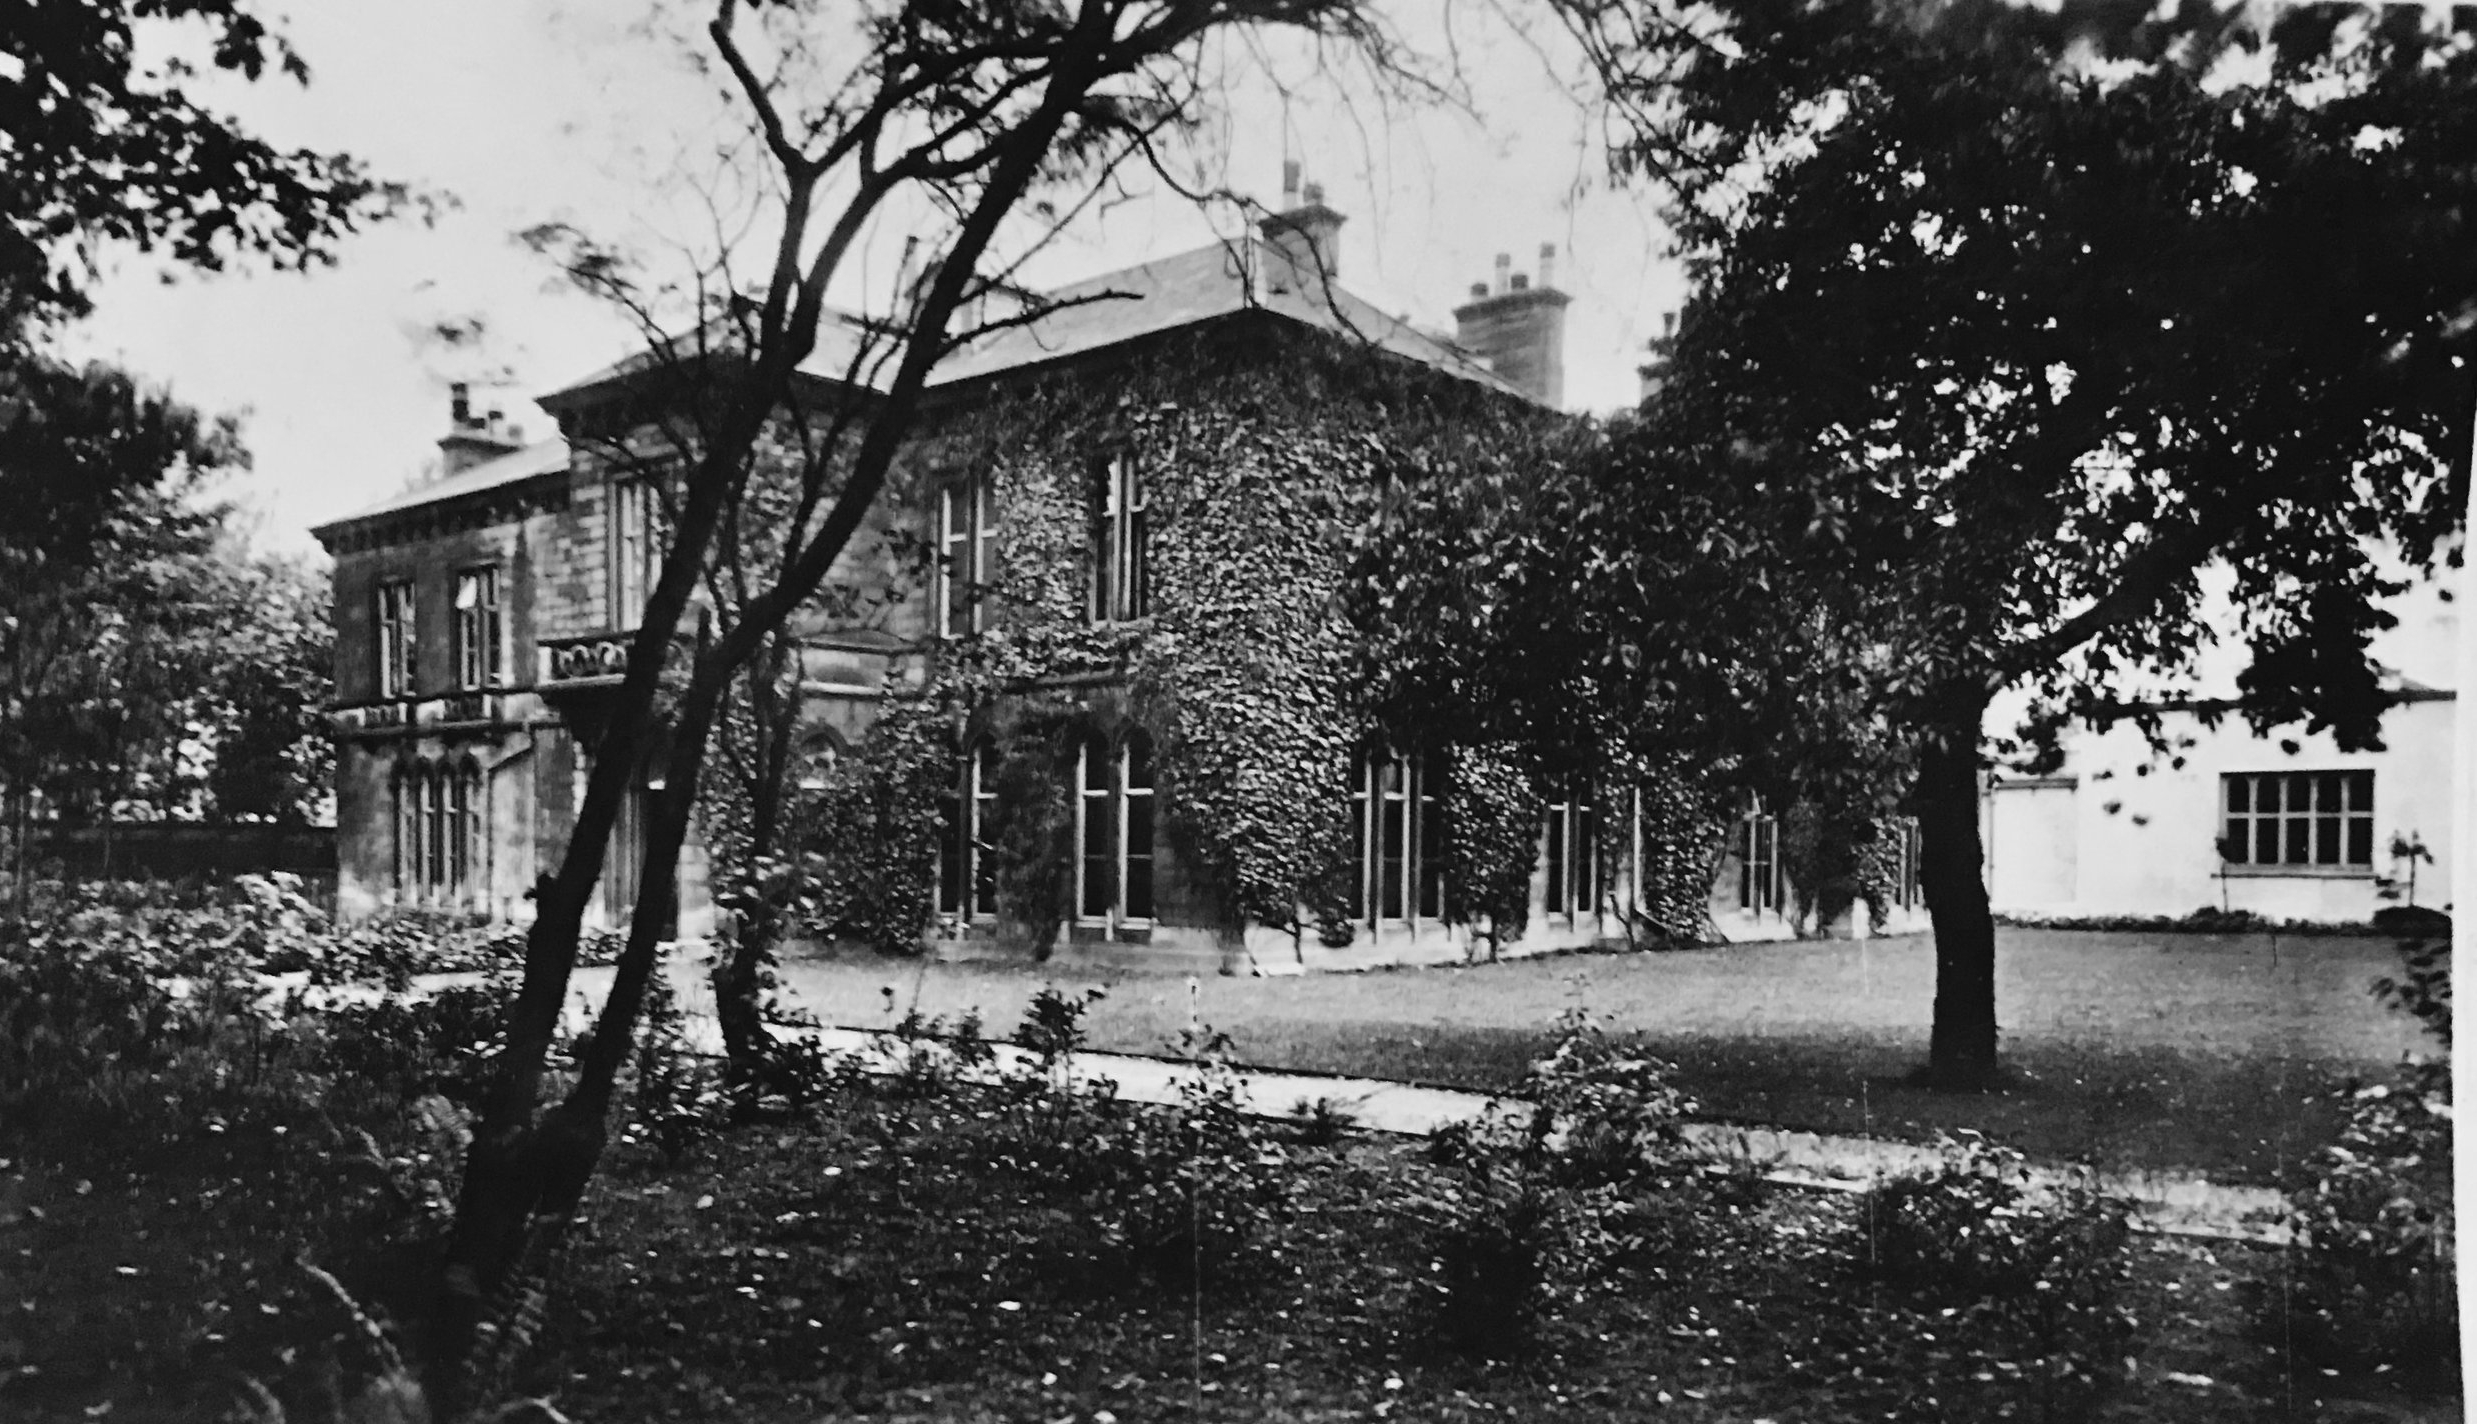 Devonshire Hall, Cumberland Road, circa 1930